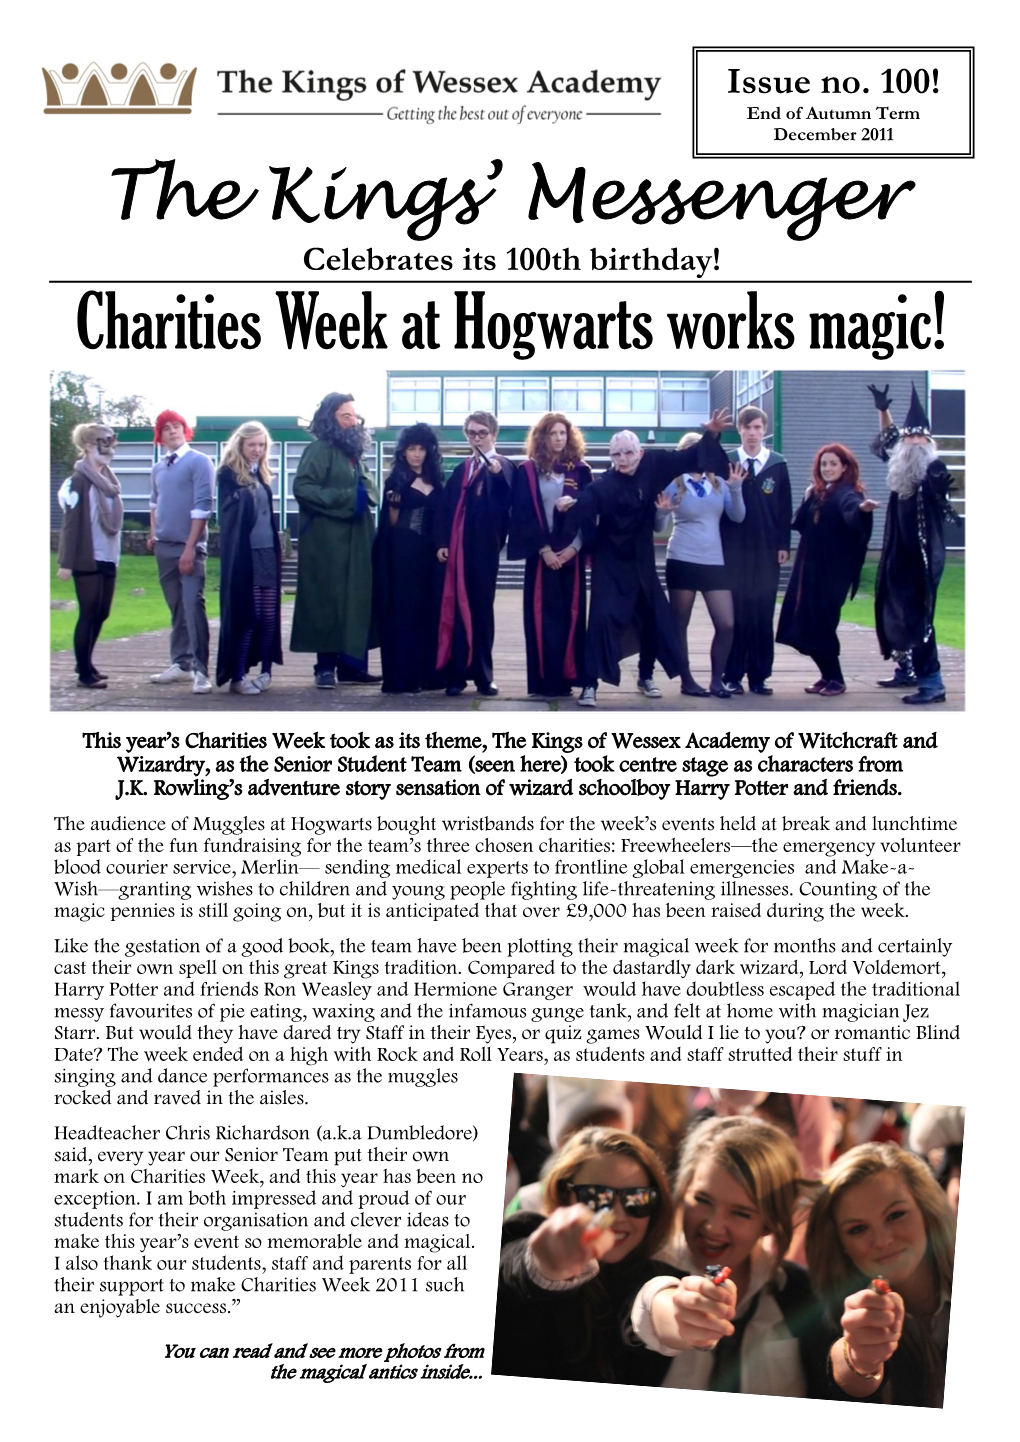 Charities Week at Hogwarts Works Magic!